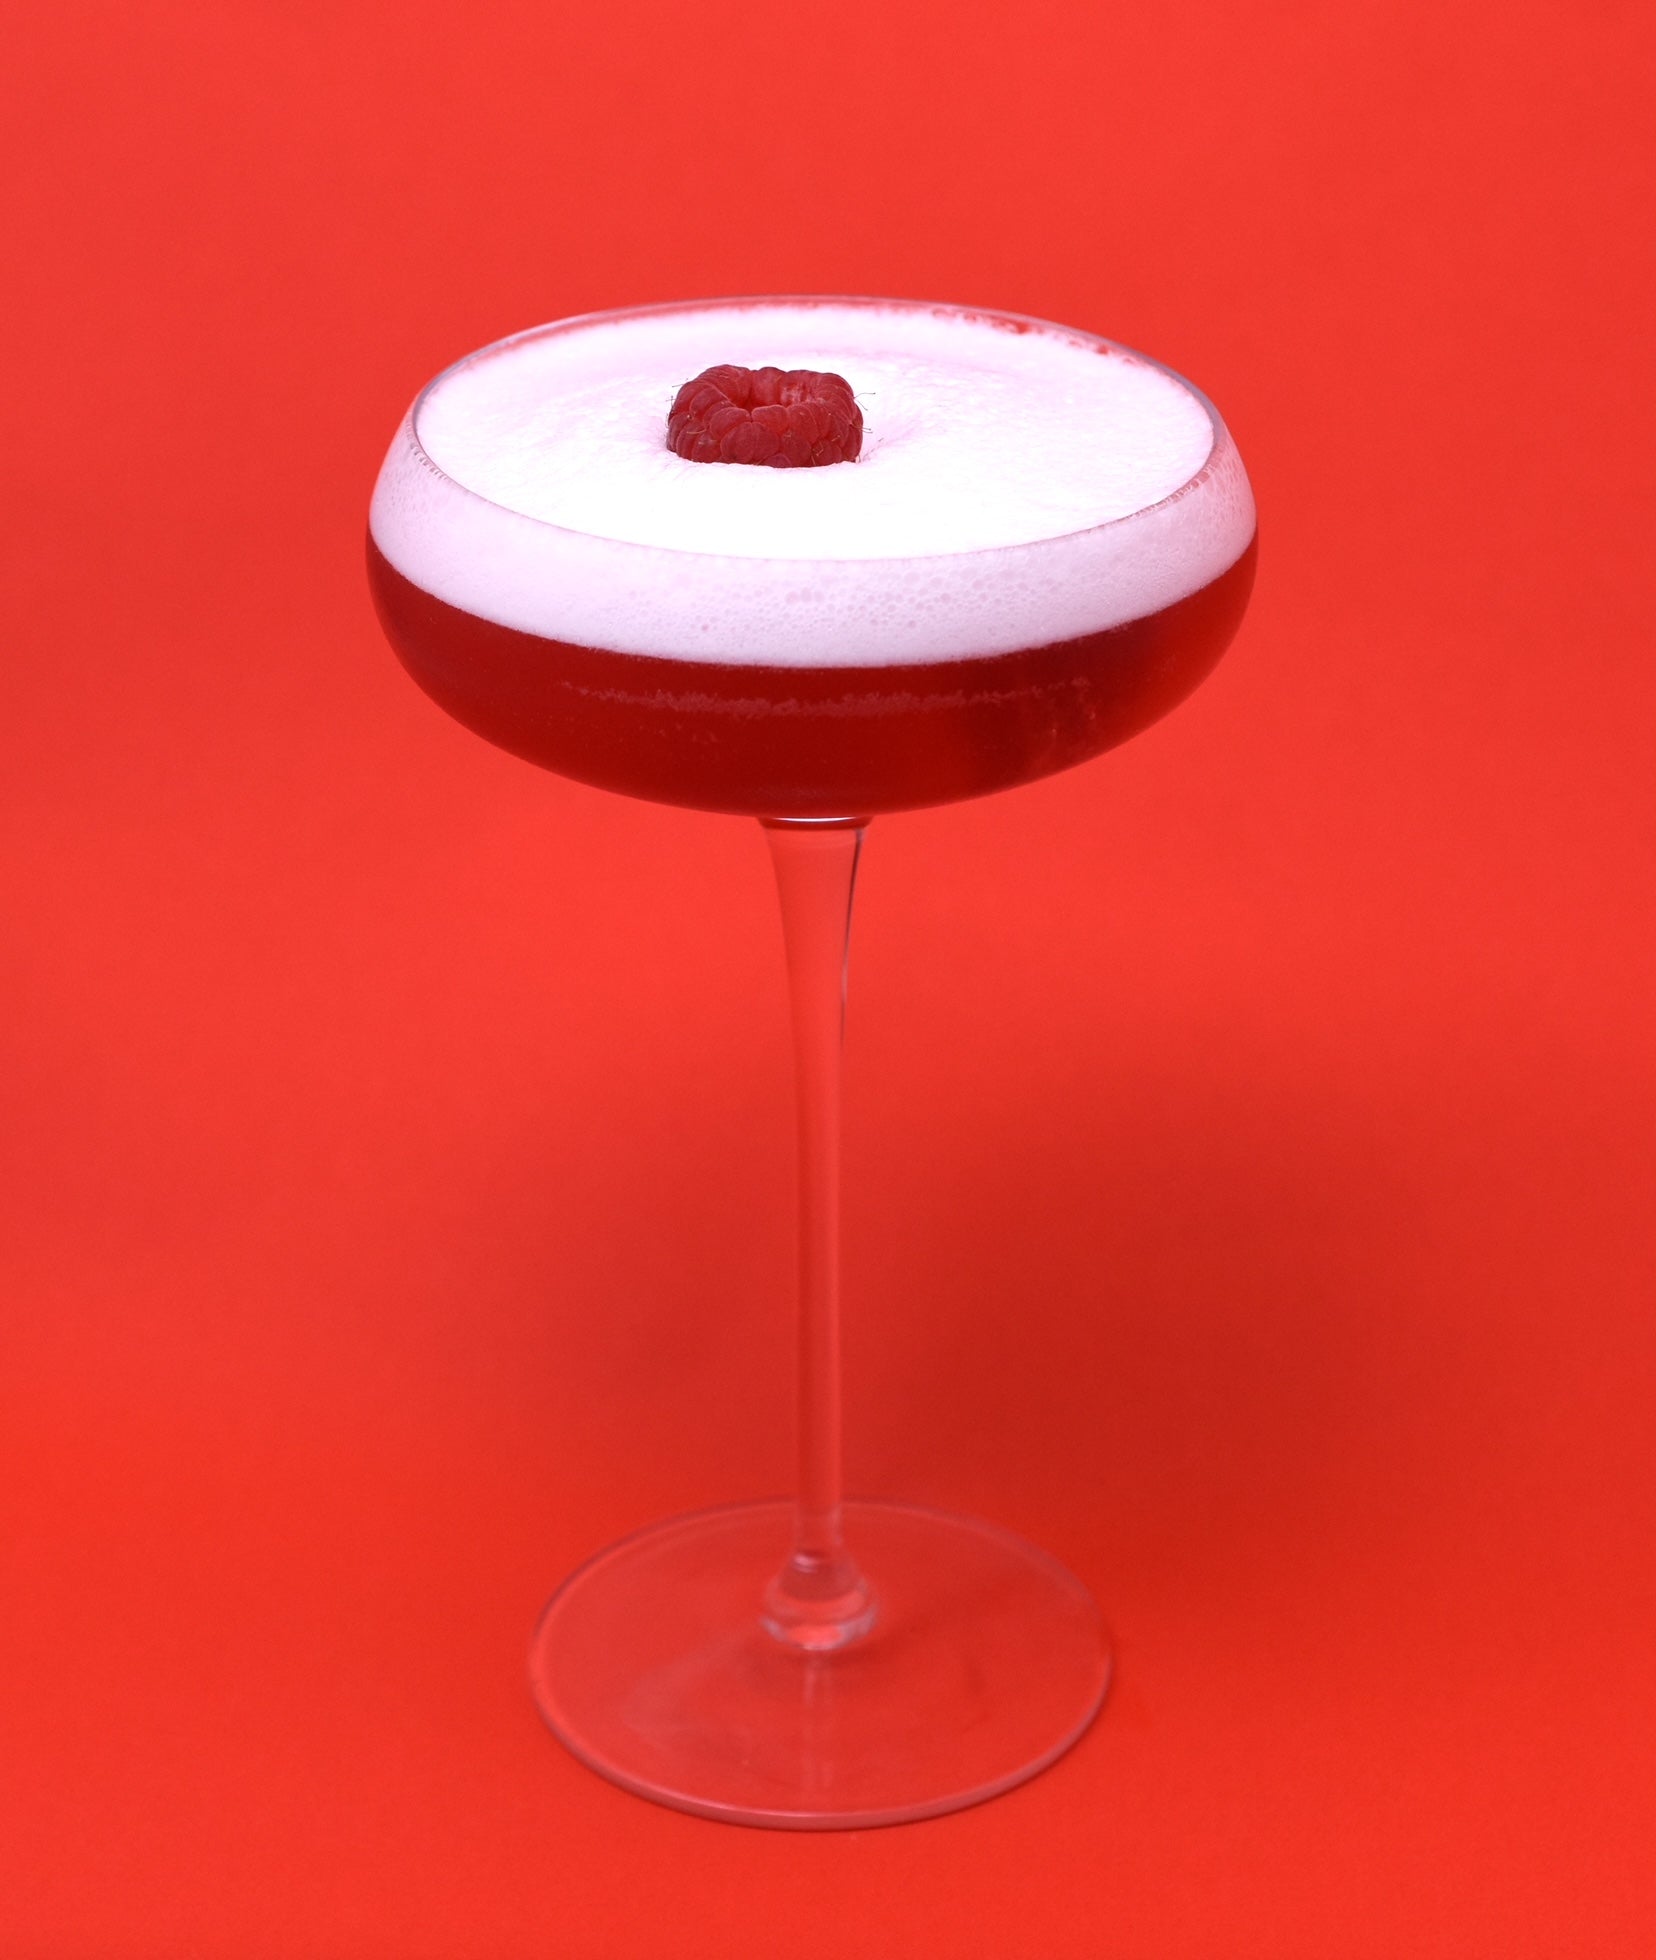 Raspberry Cocktails